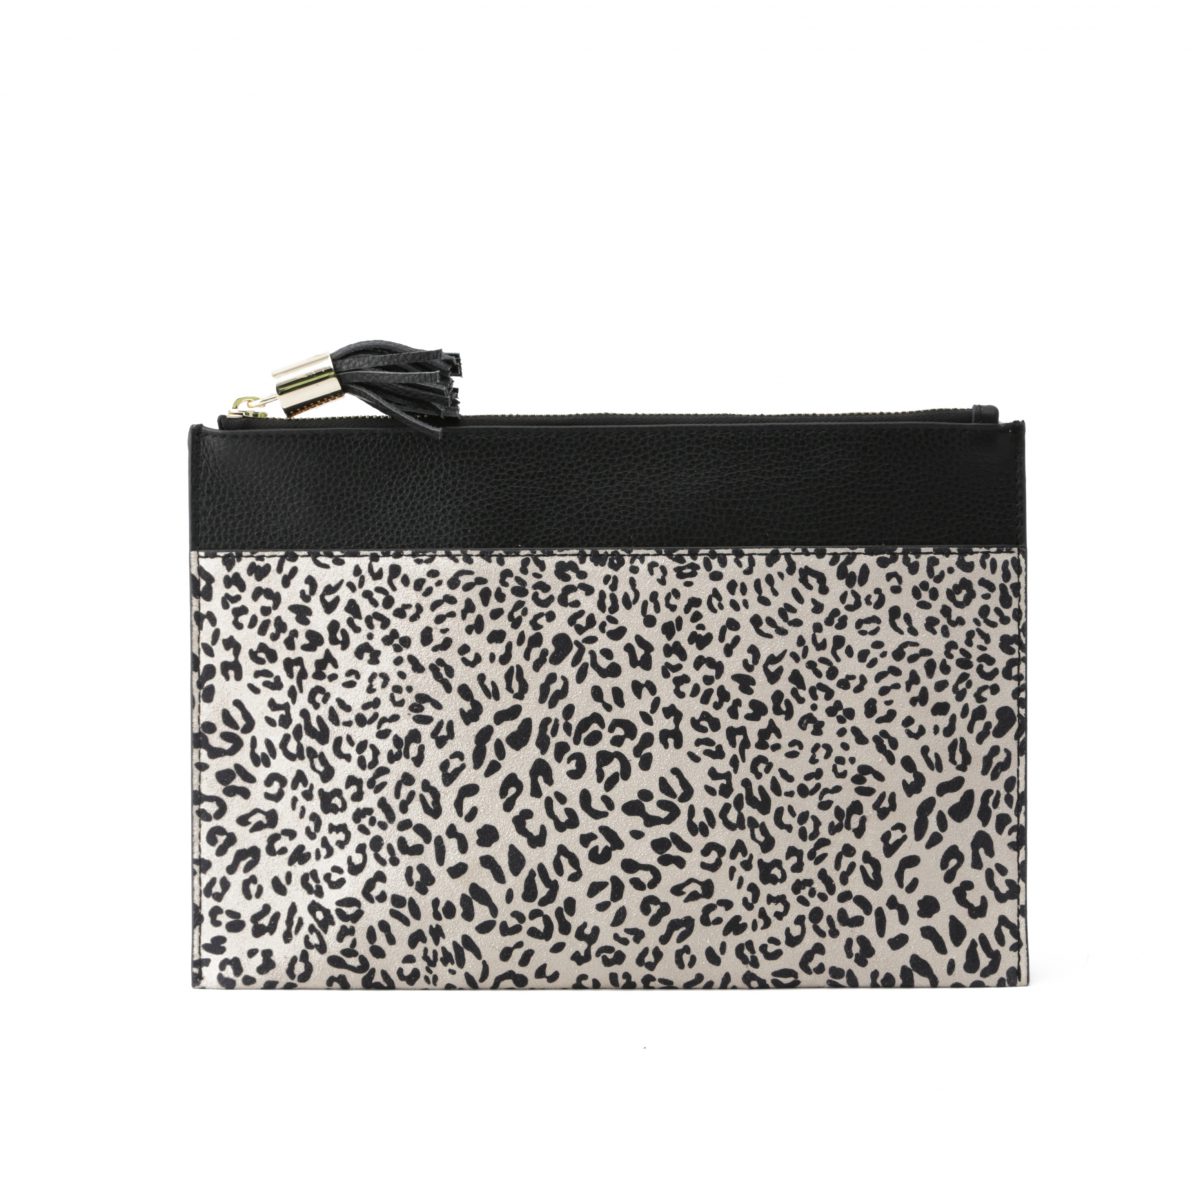 Leopard Print Genuine Leather OEM Design Women’s Clutch Bag